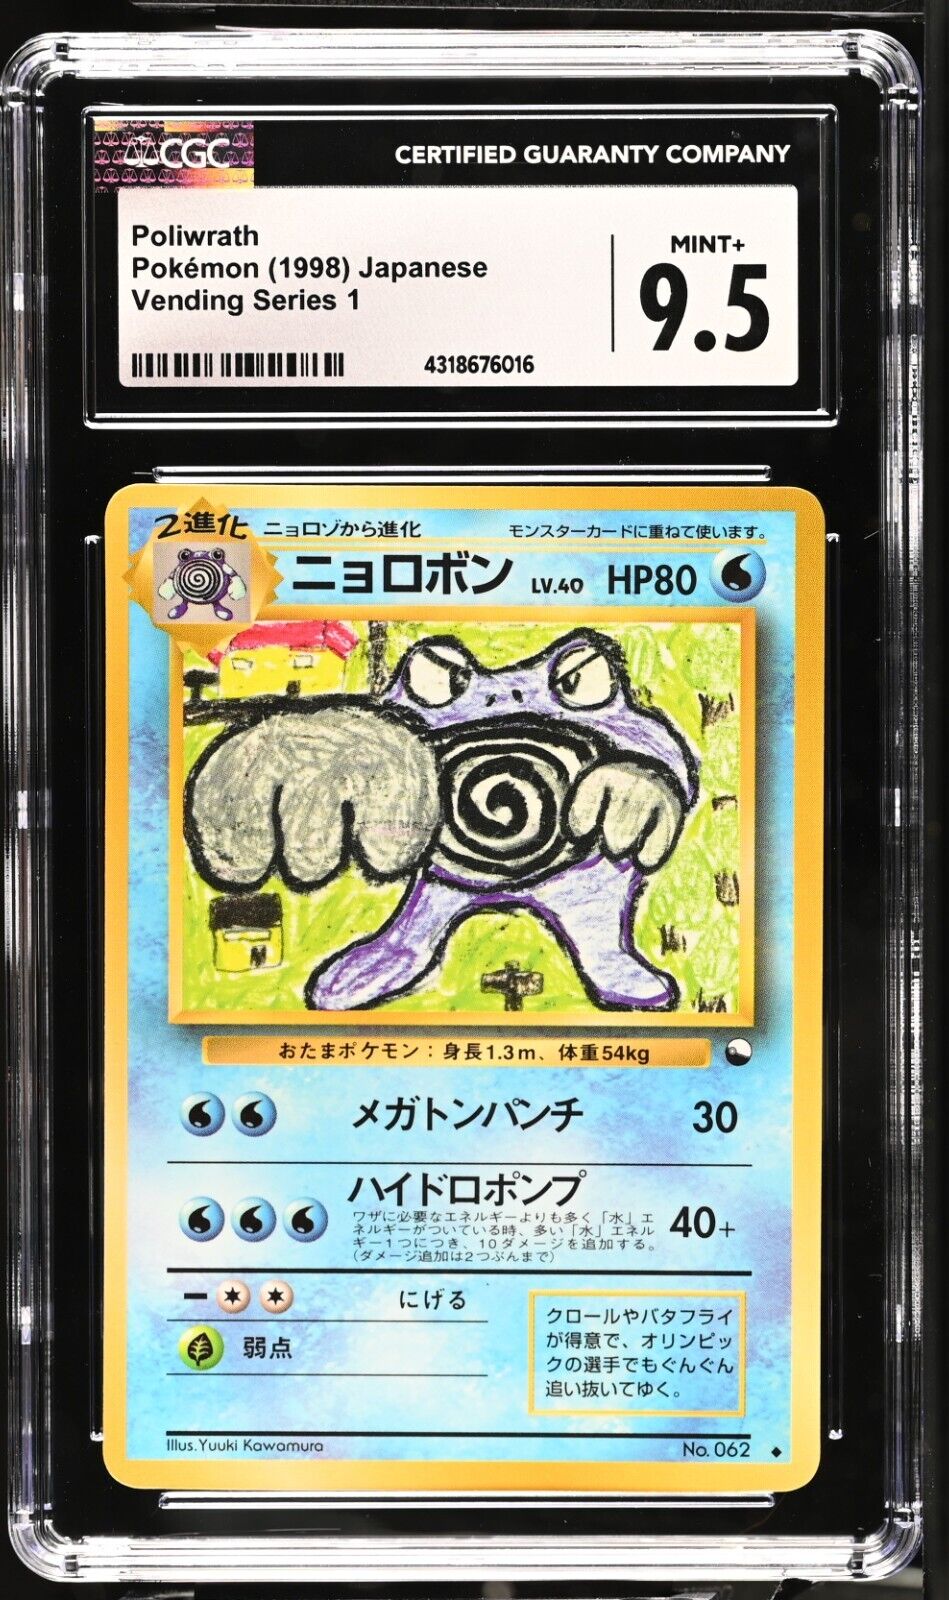 1998 Pokemon Japanese Poliwrath Glossy Rarity Vending Series 1 CGC 9.5 MINT+